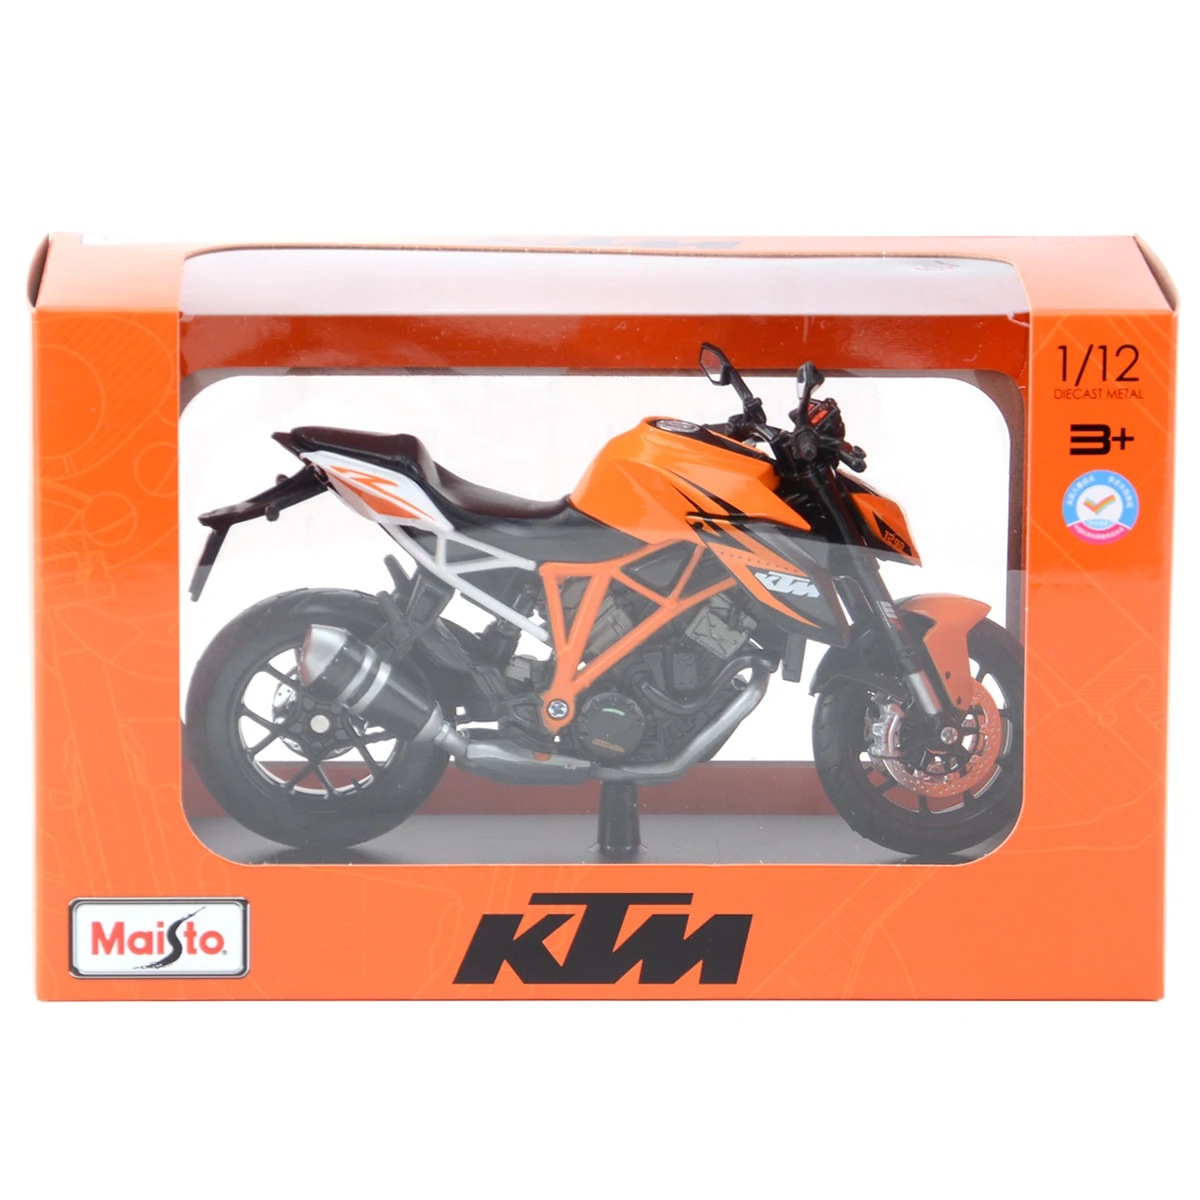 Maisto 1:12 KTM 1290 Super Duke R con soporte, vehículos fundidos a presión, pasatiempos coleccionables, juguetes de modelos de motocicleta